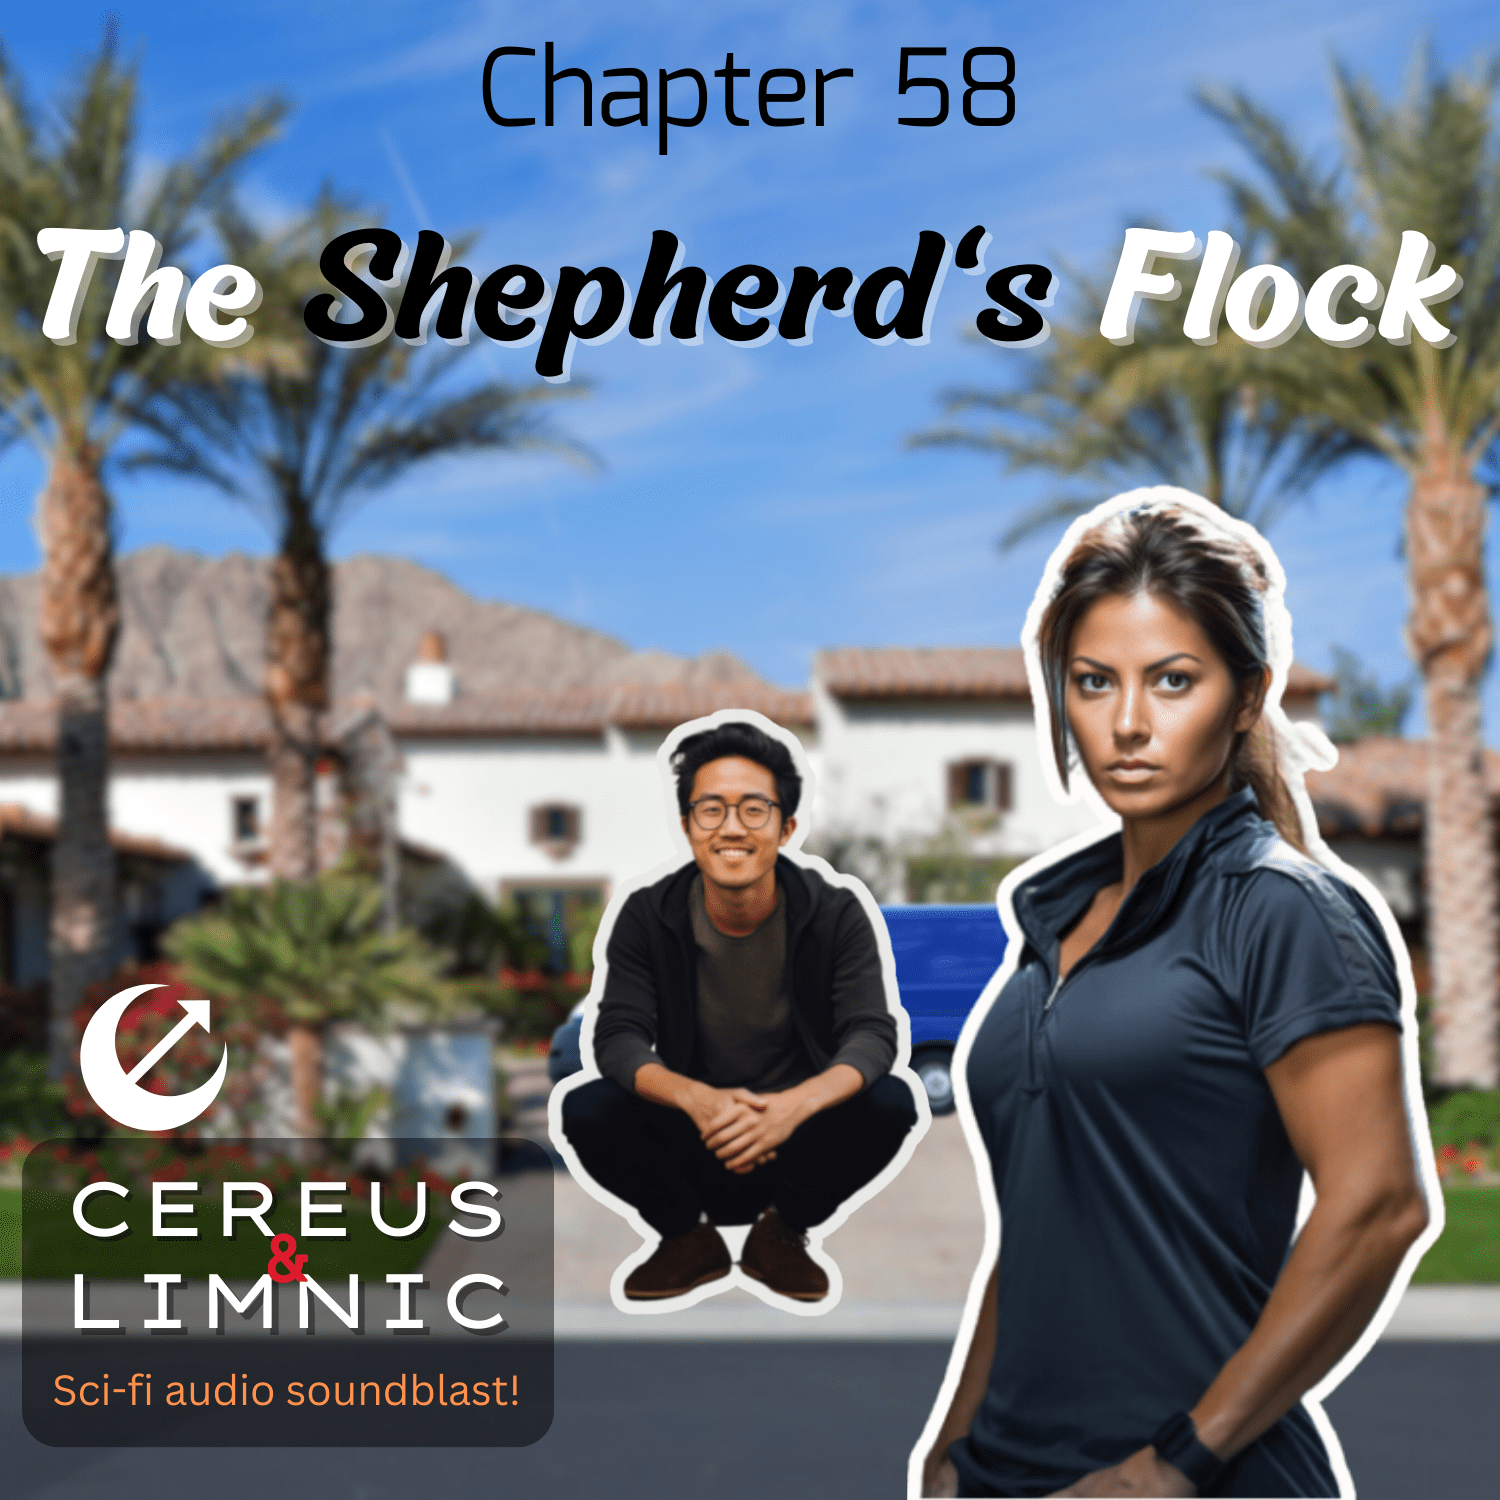 Chapter 58: The Shepherd's Flock